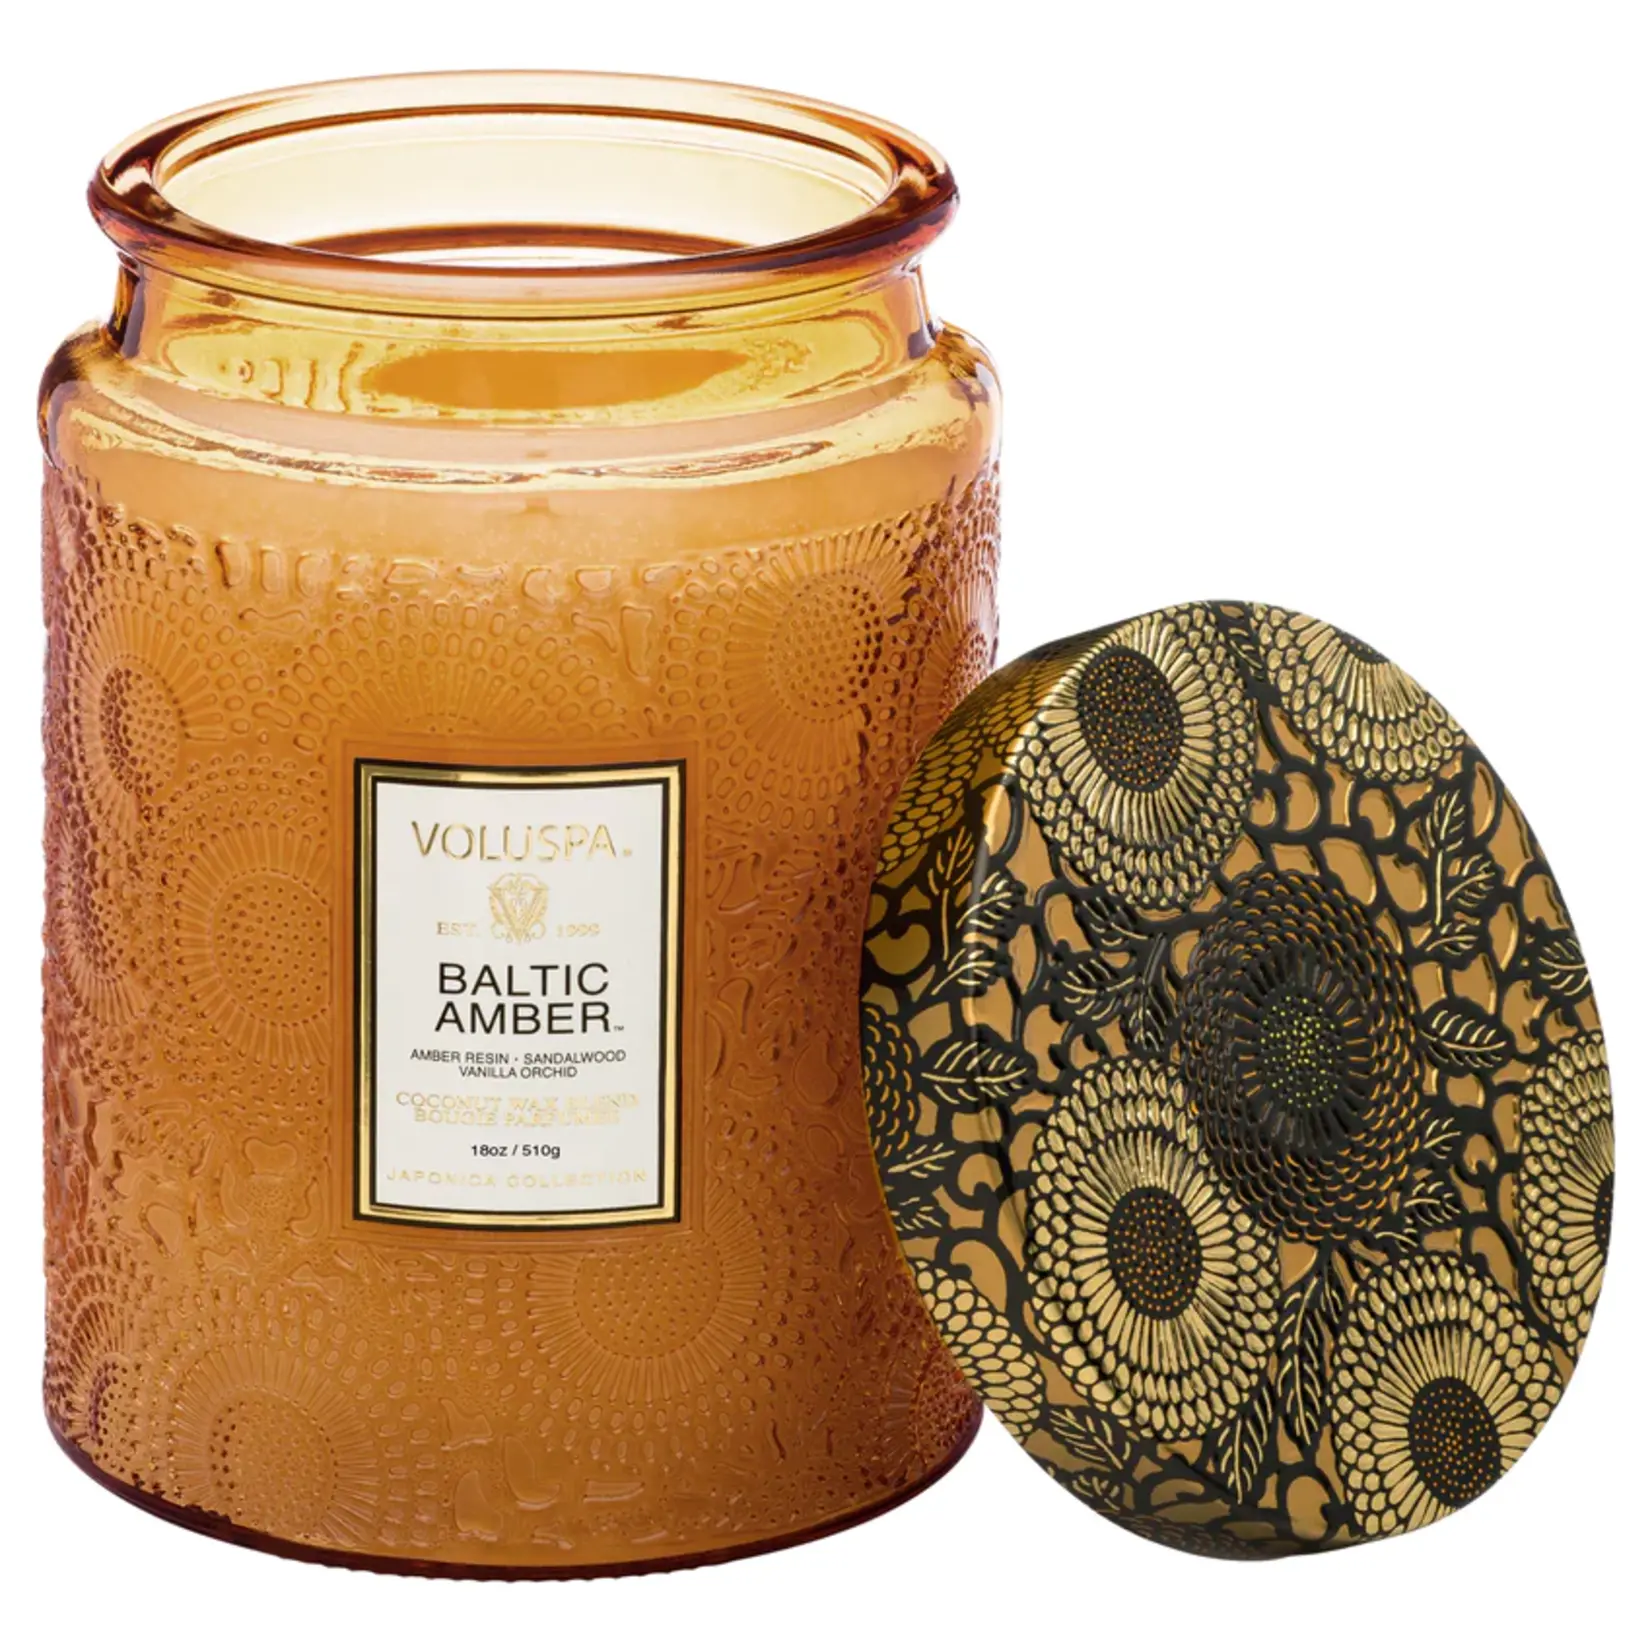 Voluspa Baltic Amber Large Candle